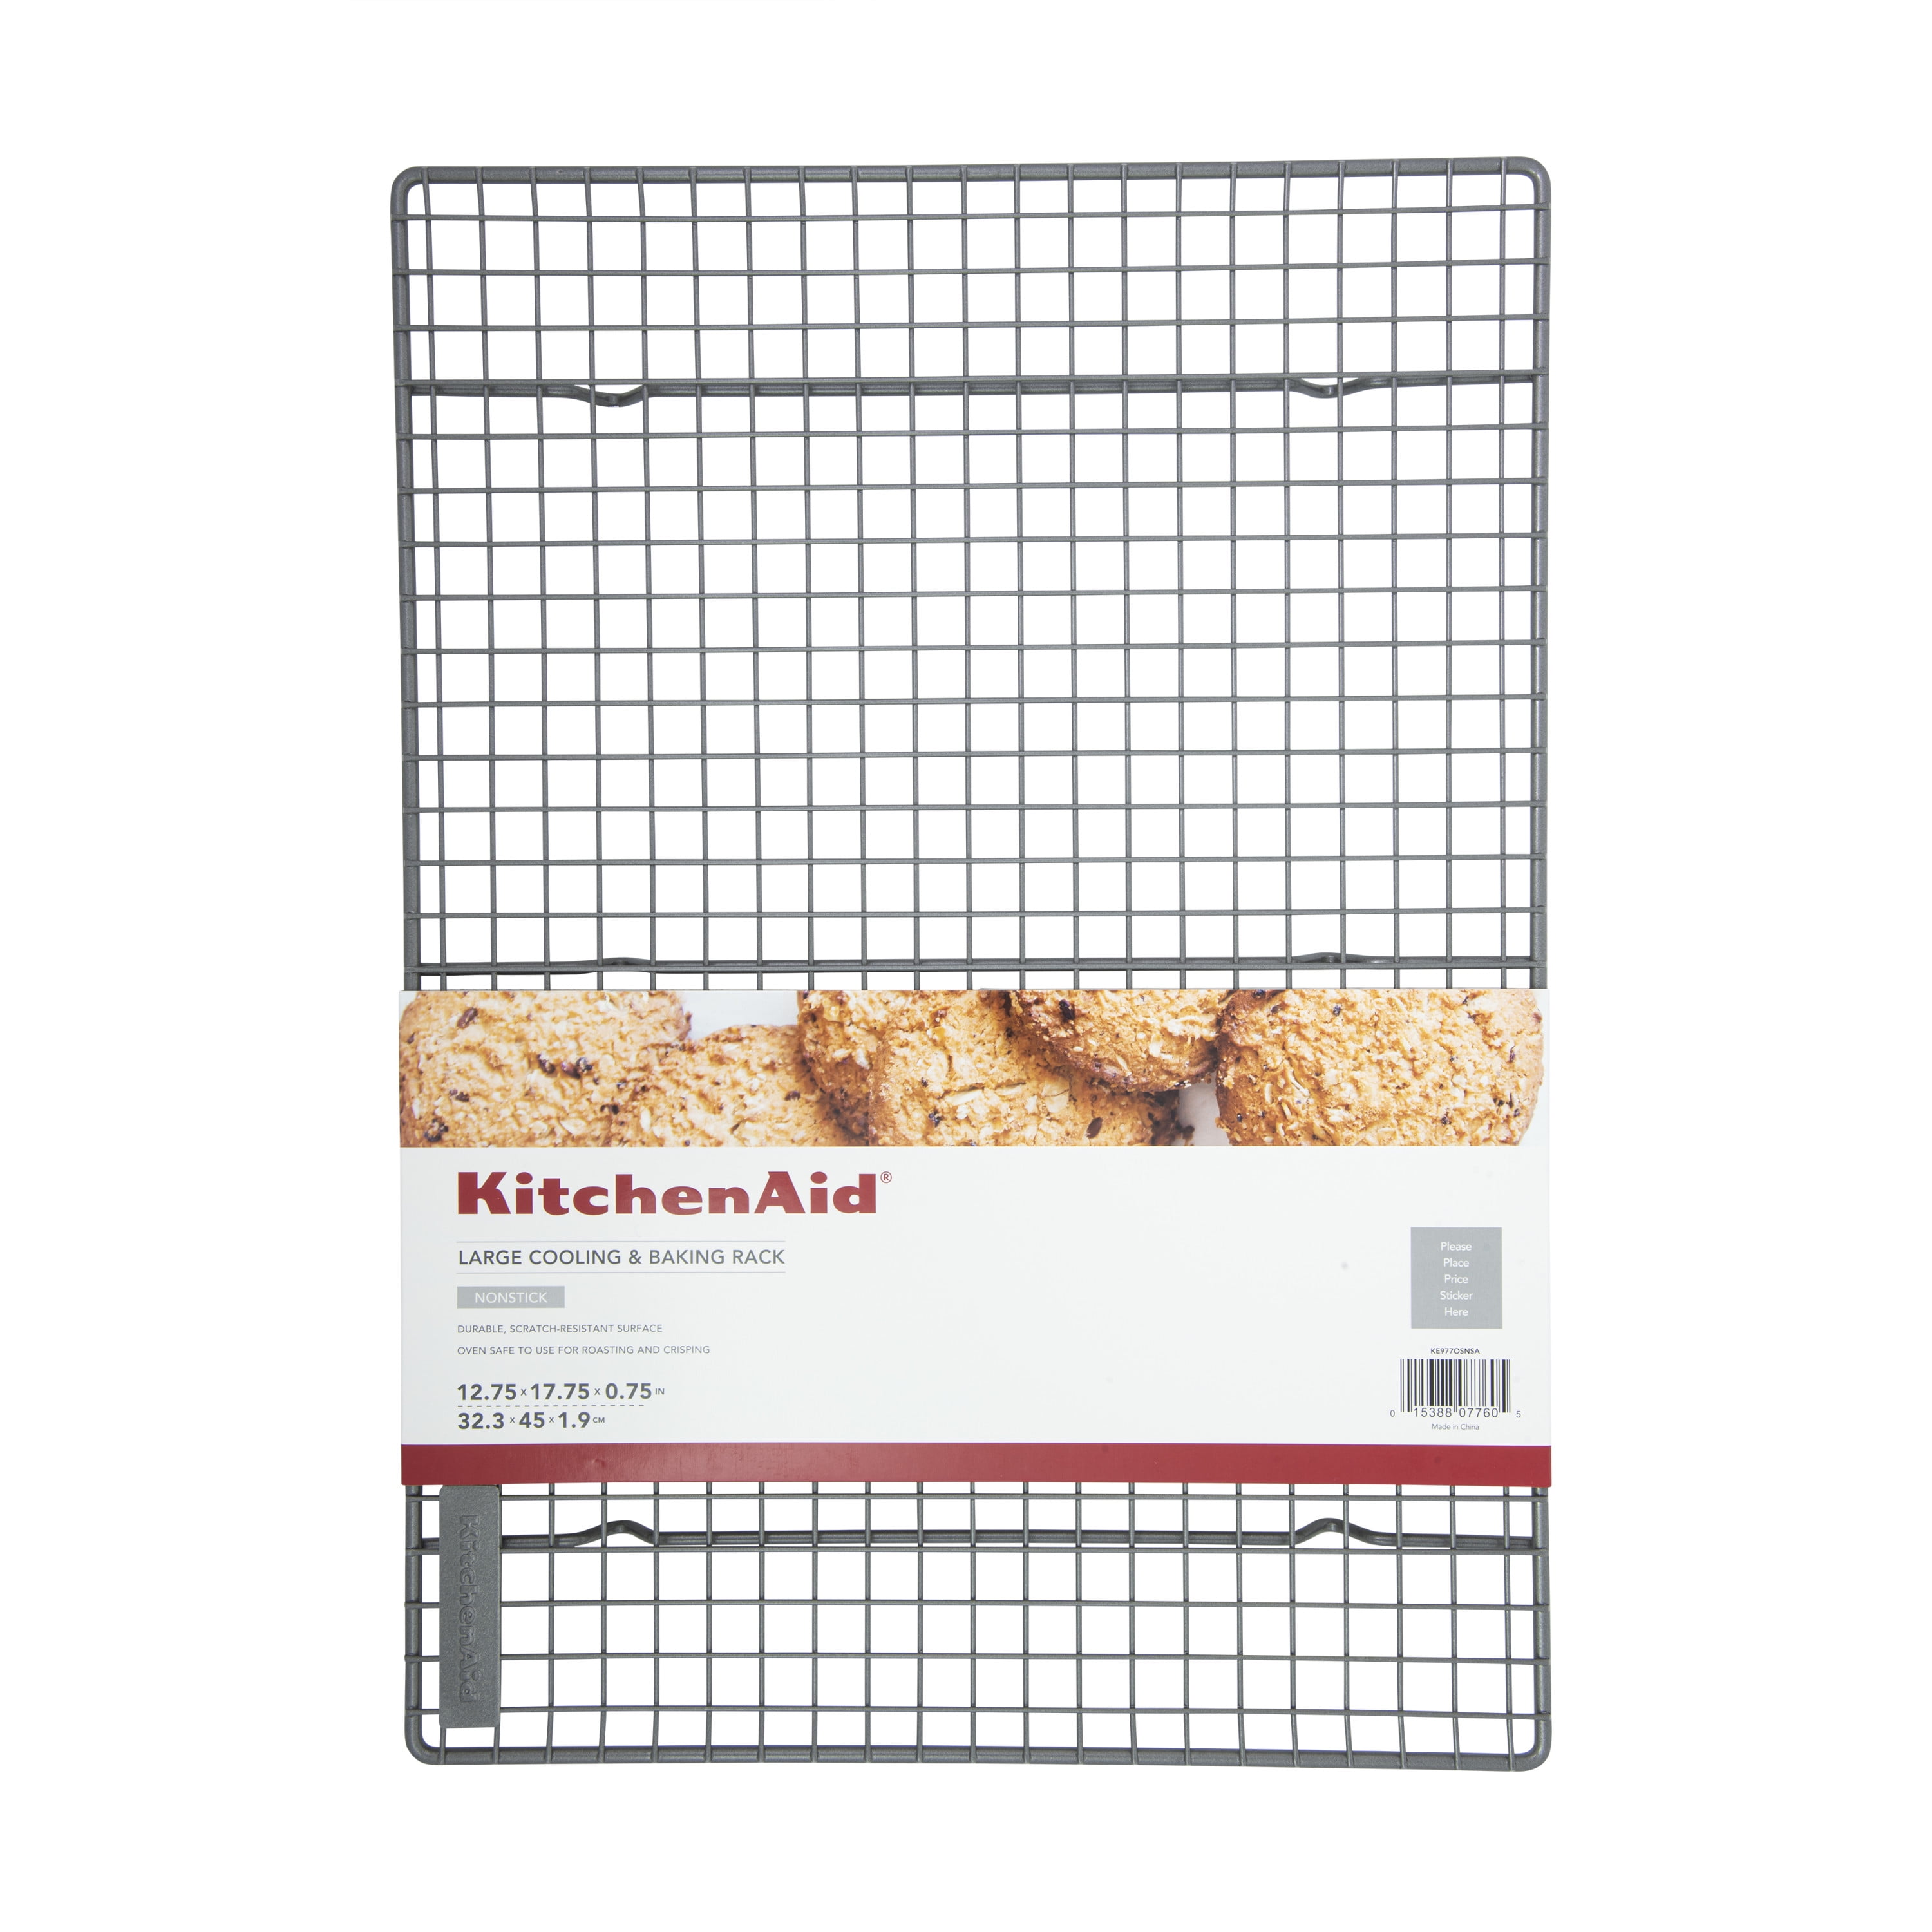 KitchenAid 18 x 13 Cookie Slider Pan and Cookie Dough Scoop - 20111952